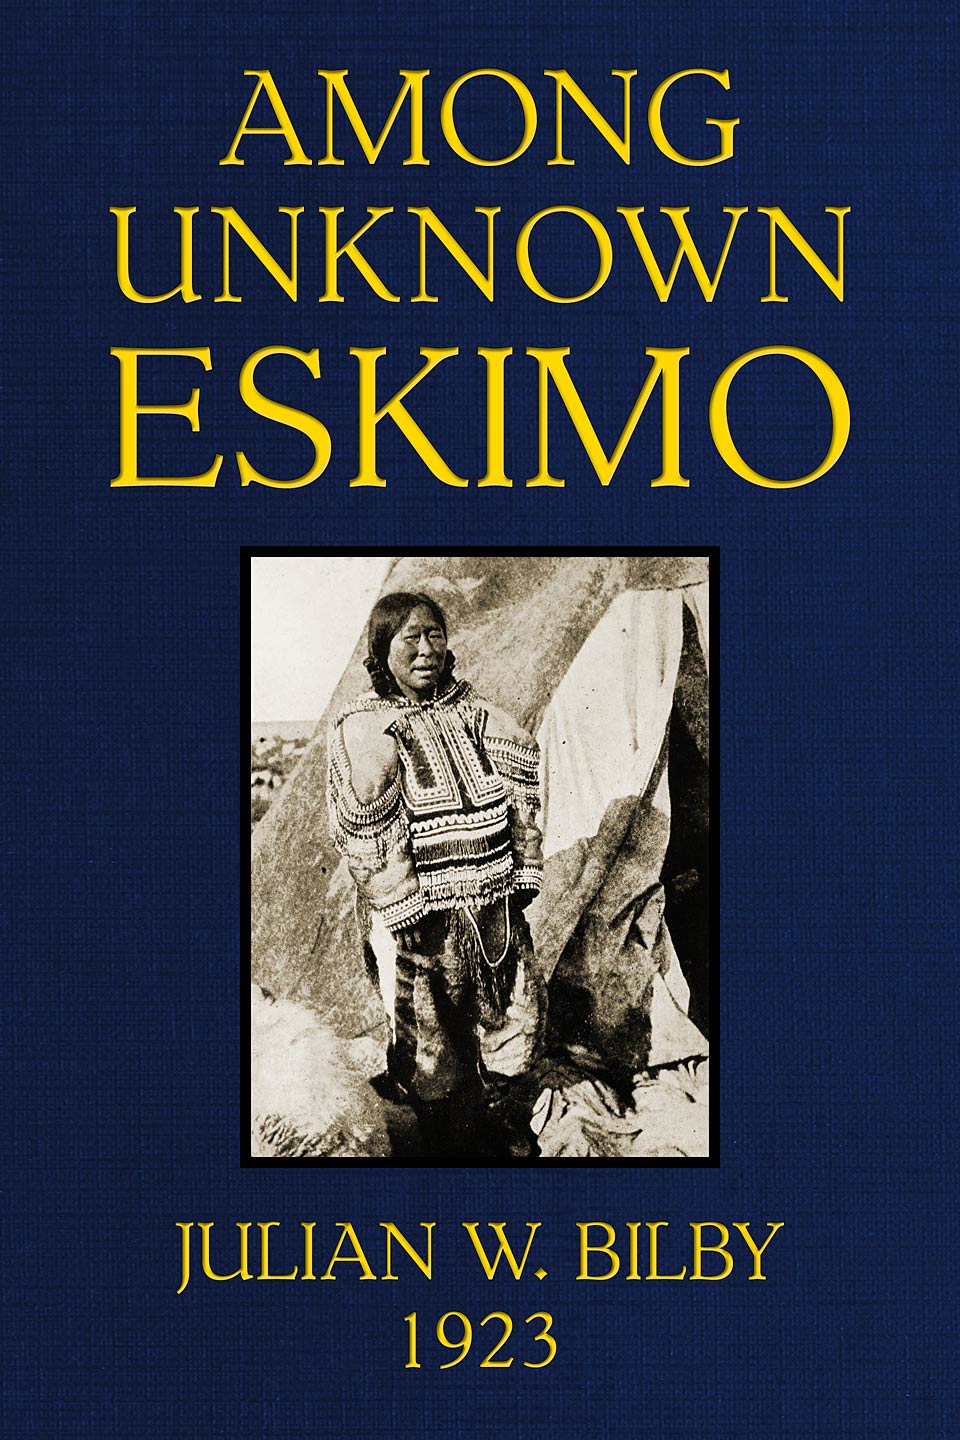 Among unknown Eskimo photo